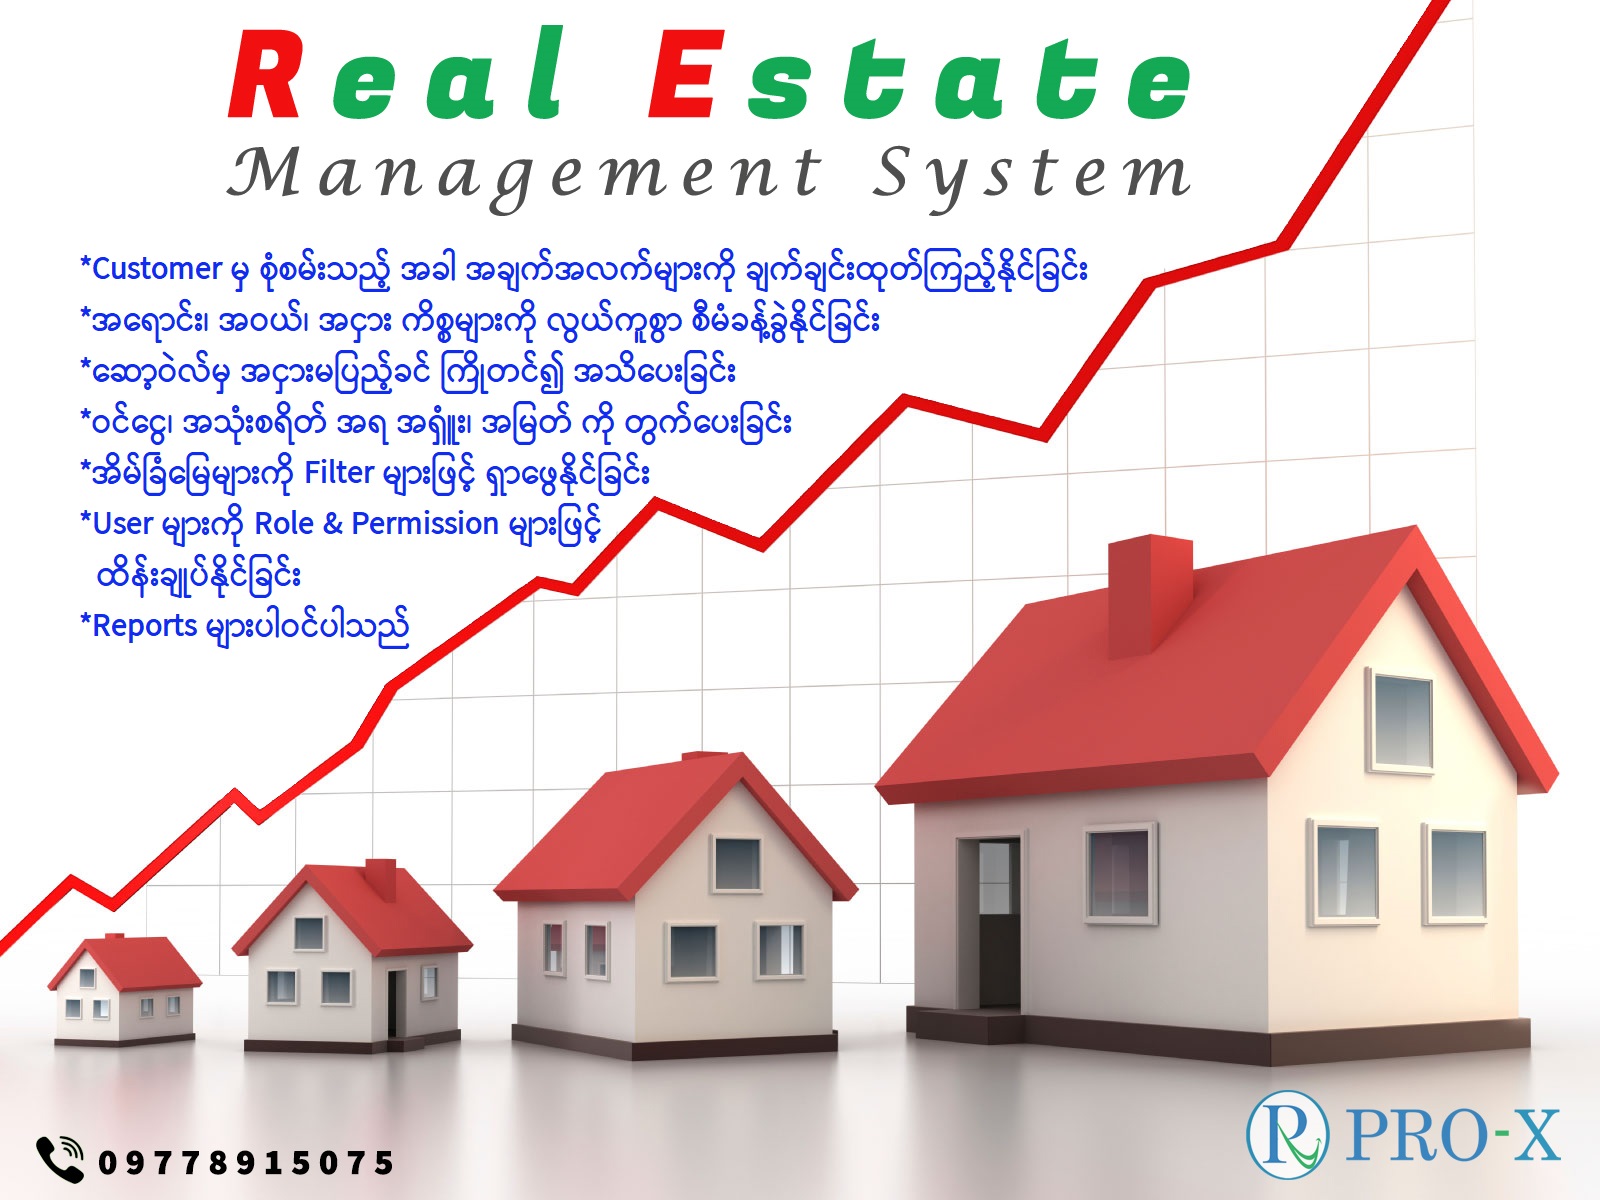 Real Estate Management System ဆိုတာ အိမ်ခြံမြေ ကုမ္ပဏီများ နှင့် အိမ်ခြံမြေ အကျိုးဆောင် လုပ်ငန်းလုပ်ကိုင် ဆောင်ရွက်နေသူများ အသုံးပြုရန်အတွက် လိုအပ်သော ဆော့ဝဲလ် တစ်ခုပဲ ဖြစ်ပါသည်။